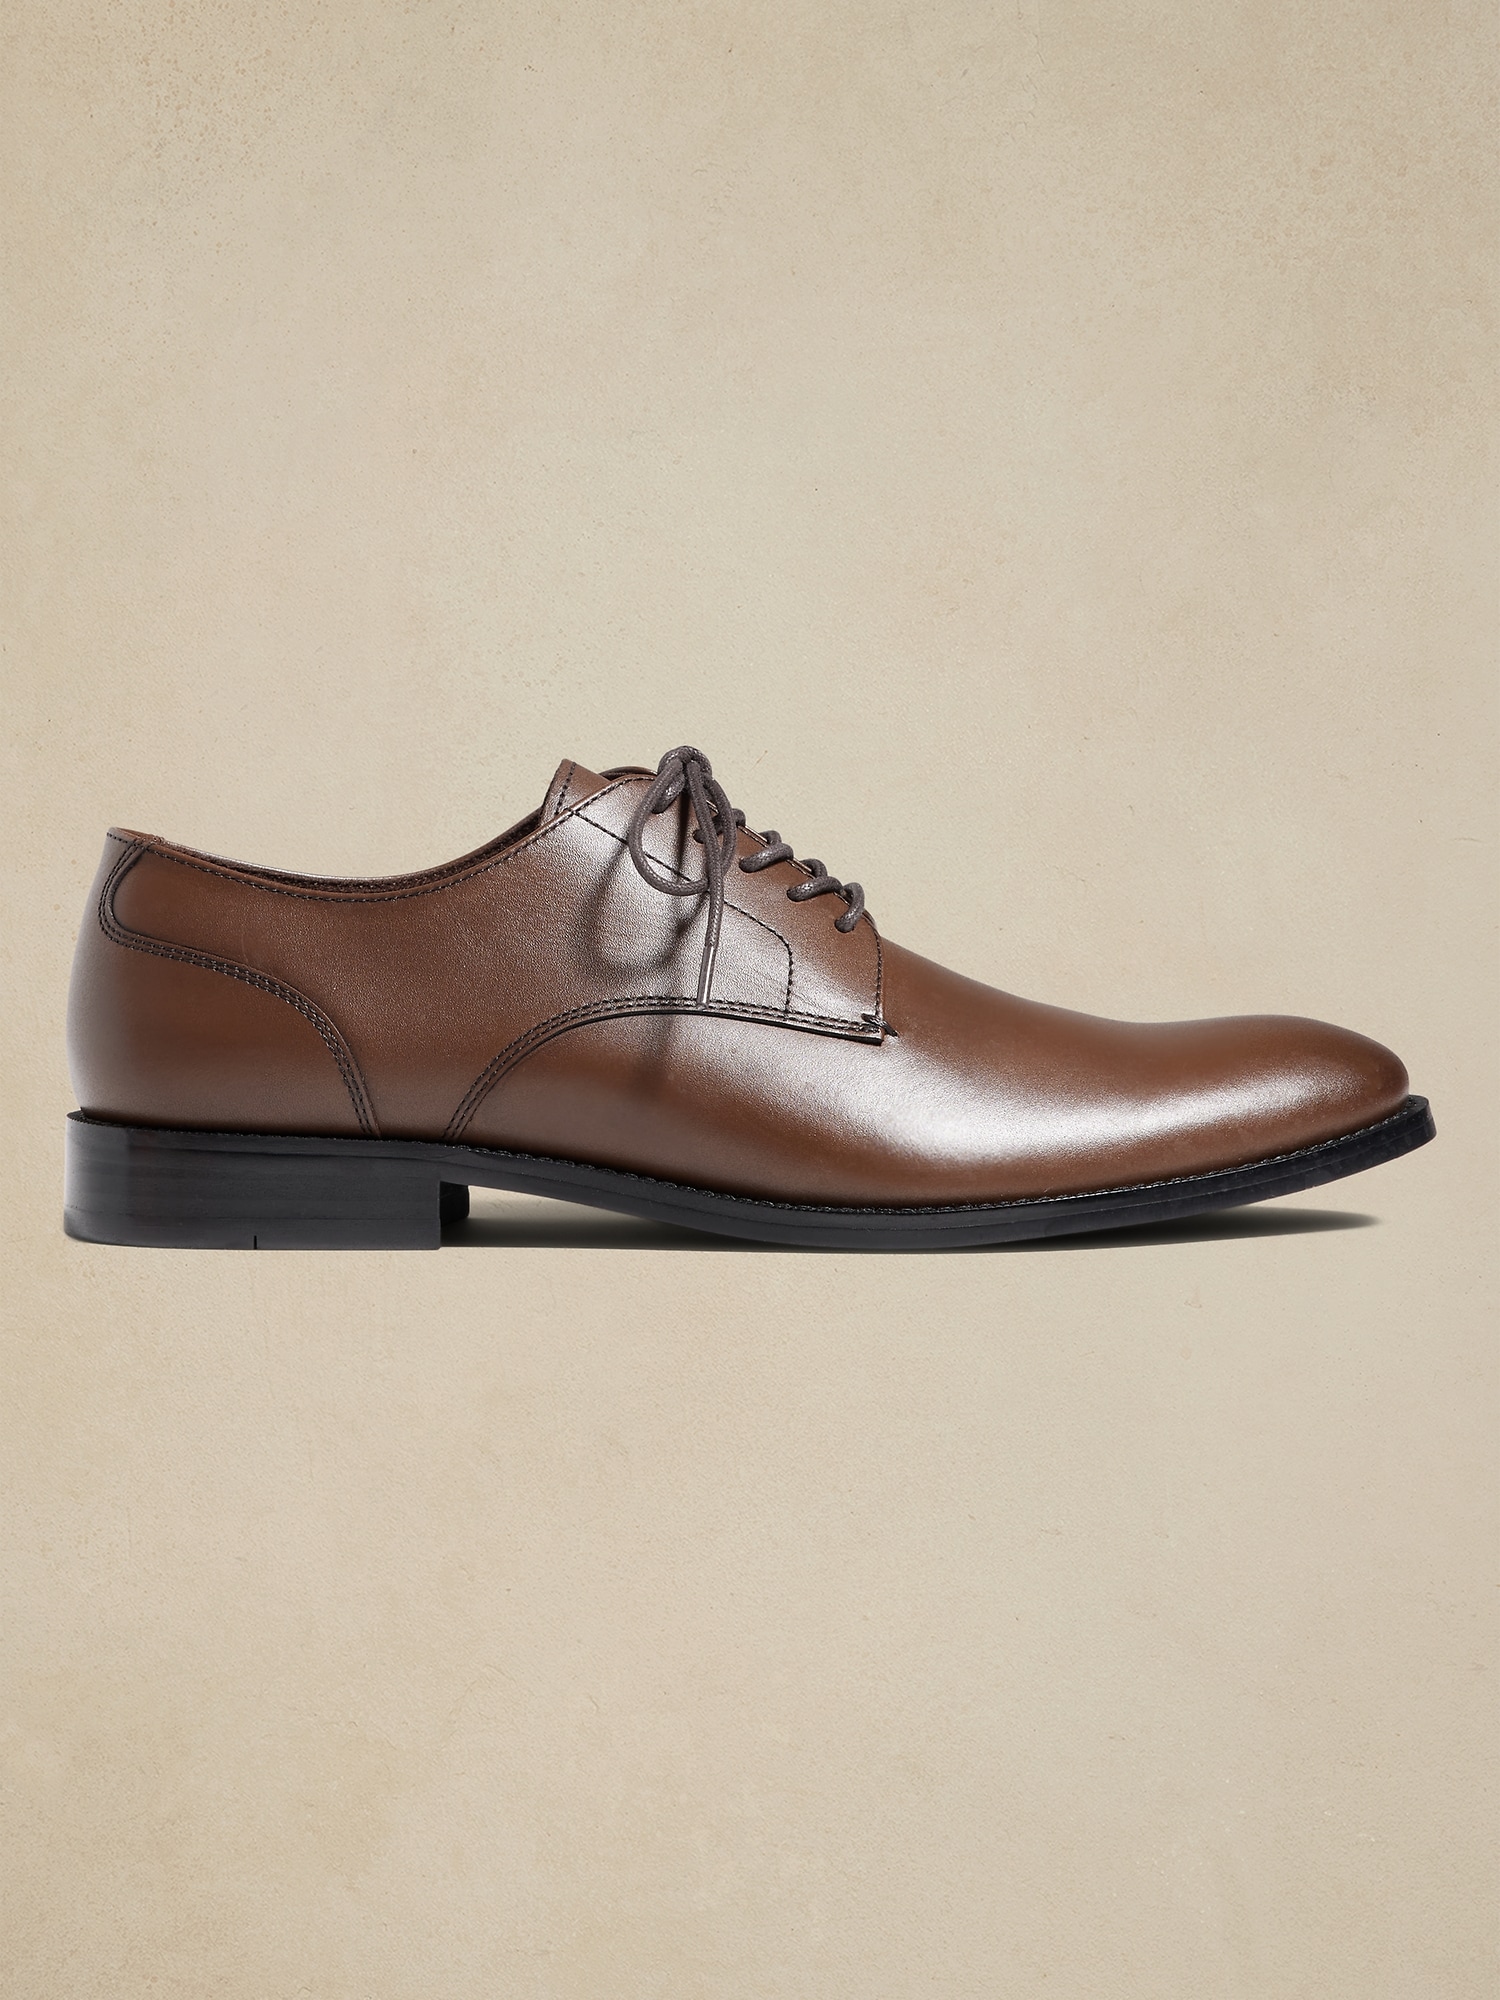 Oxford Leather Dress Shoe